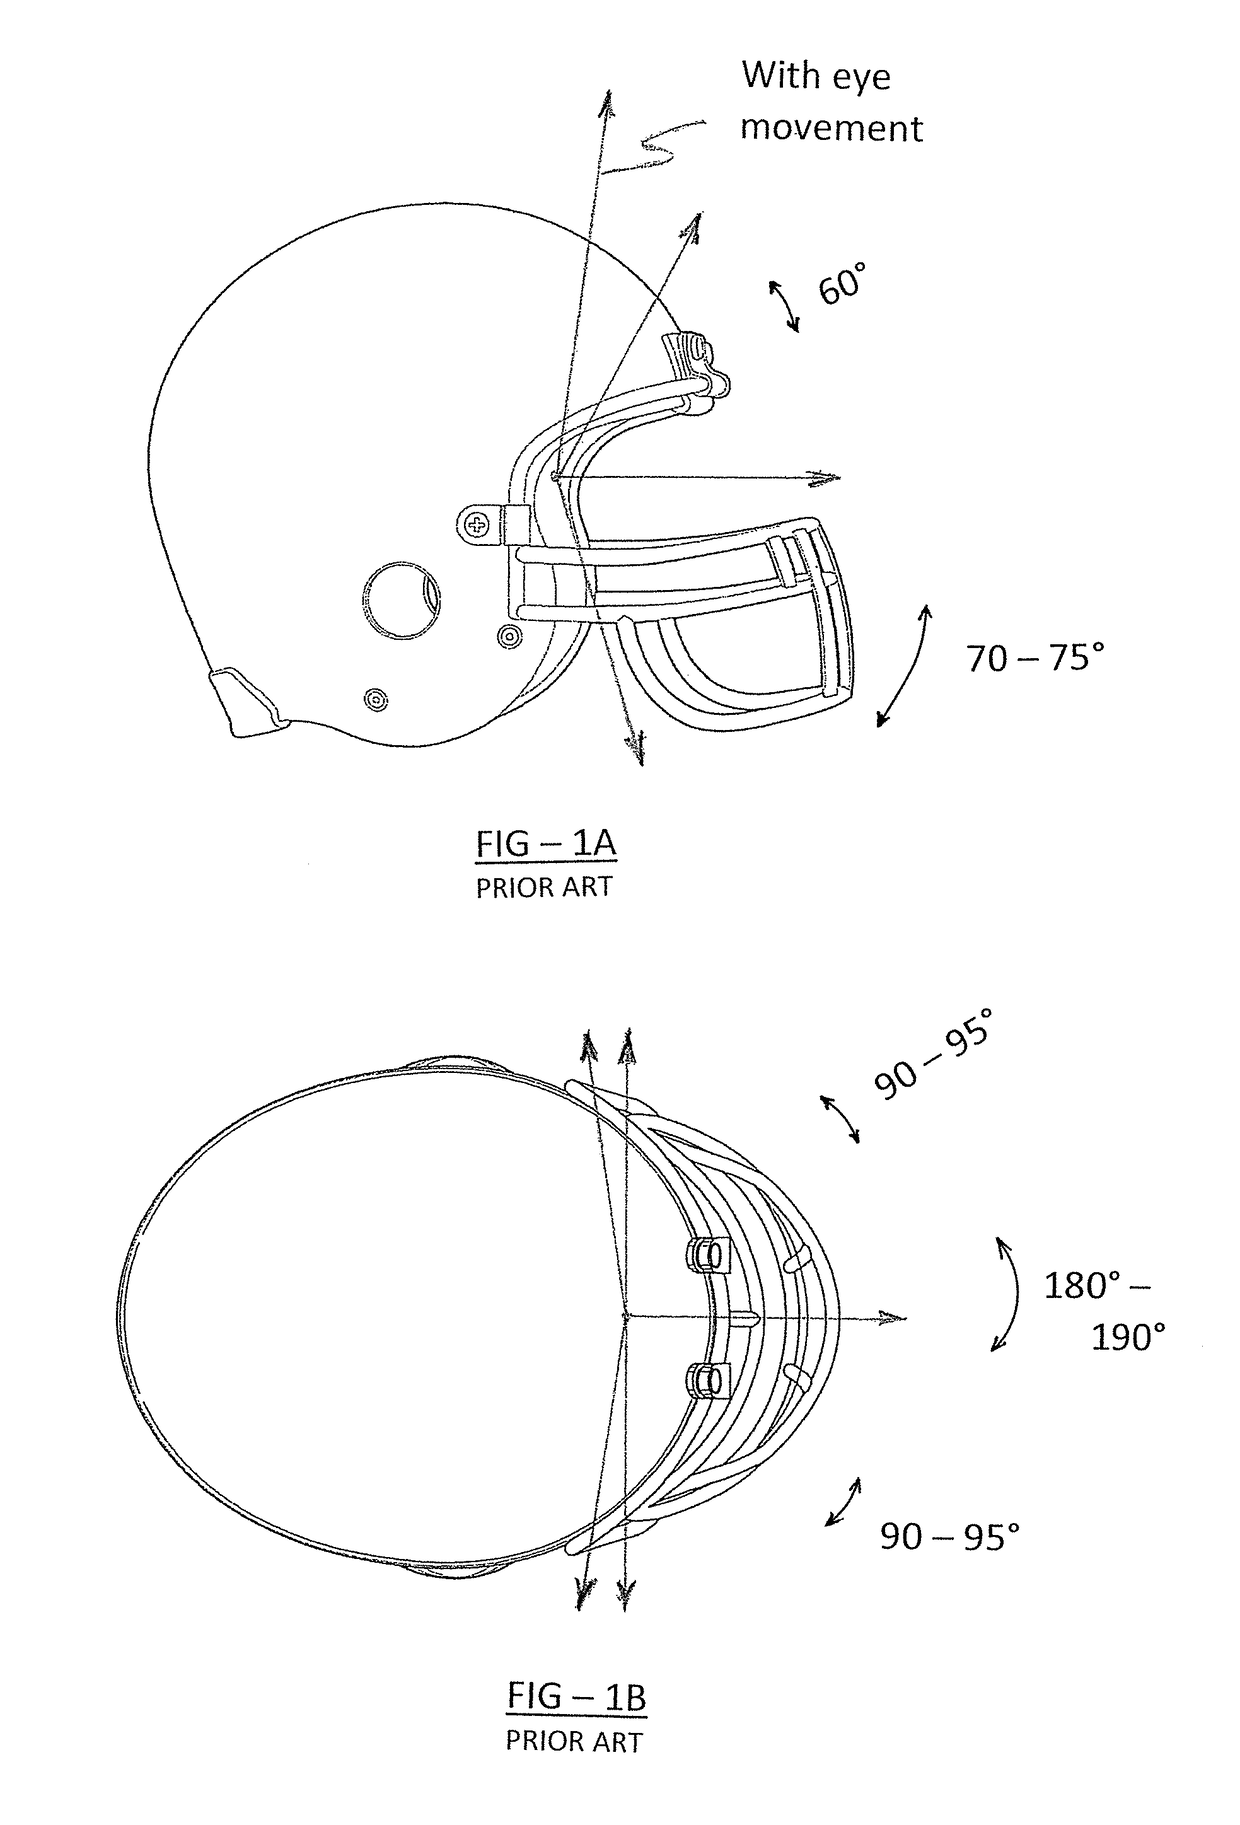 Optimized visual field helmets